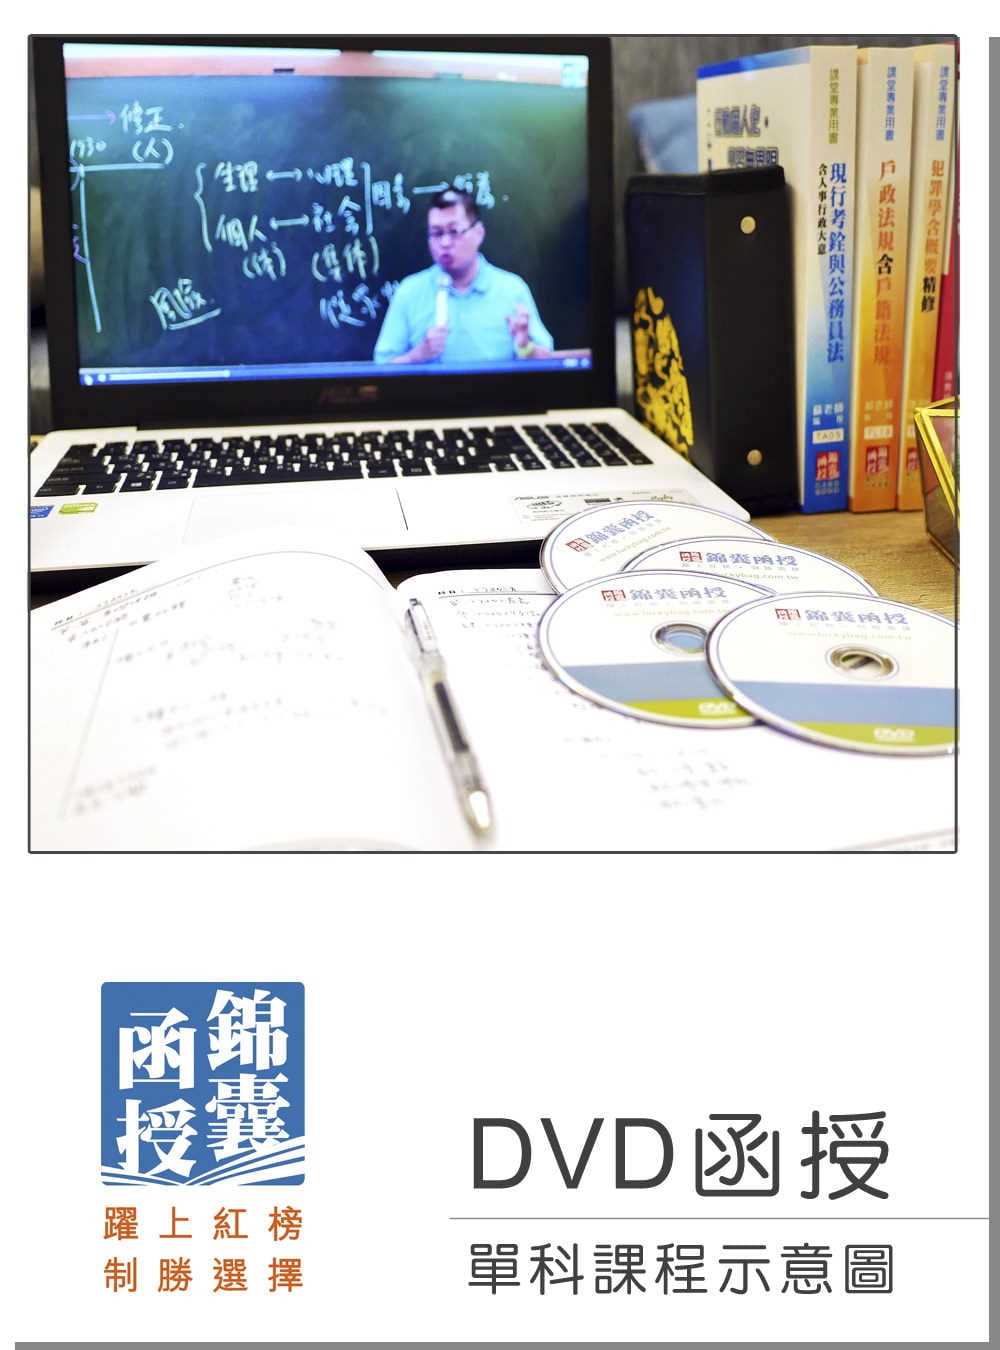 【DVD函授】移民政策〈含移民人權〉-單科課程(109版)